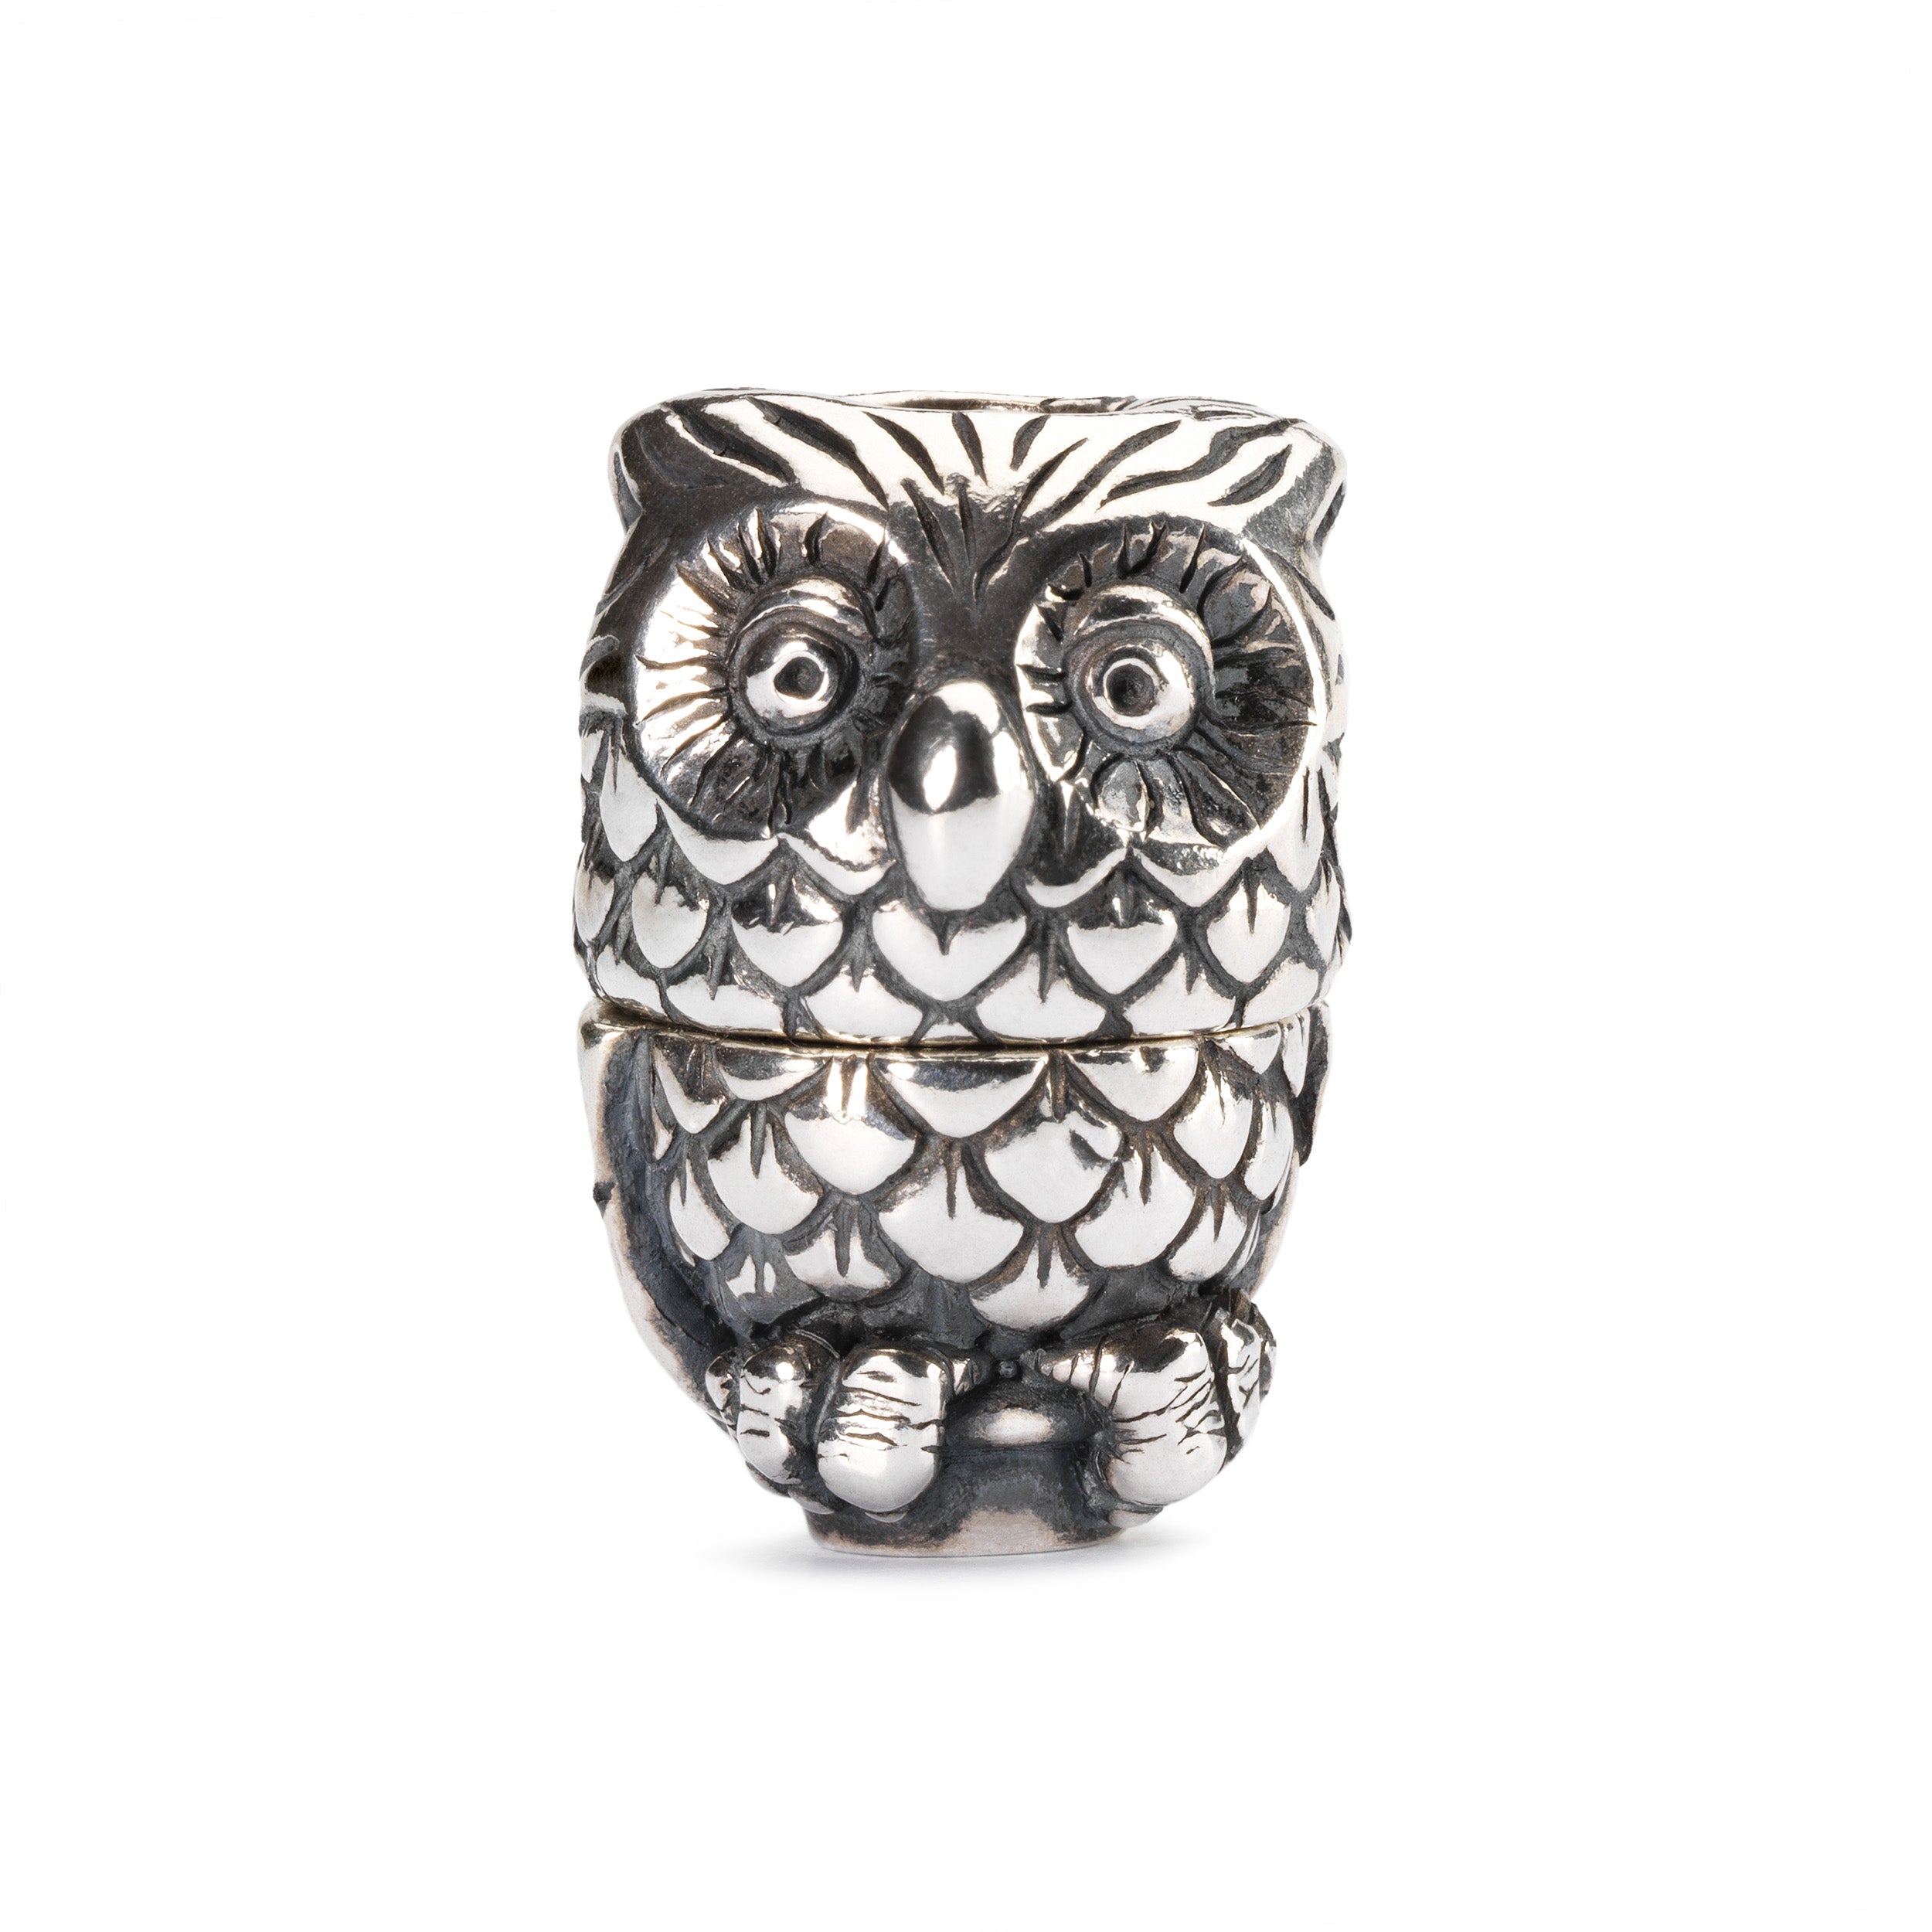 Night Owl Pendant